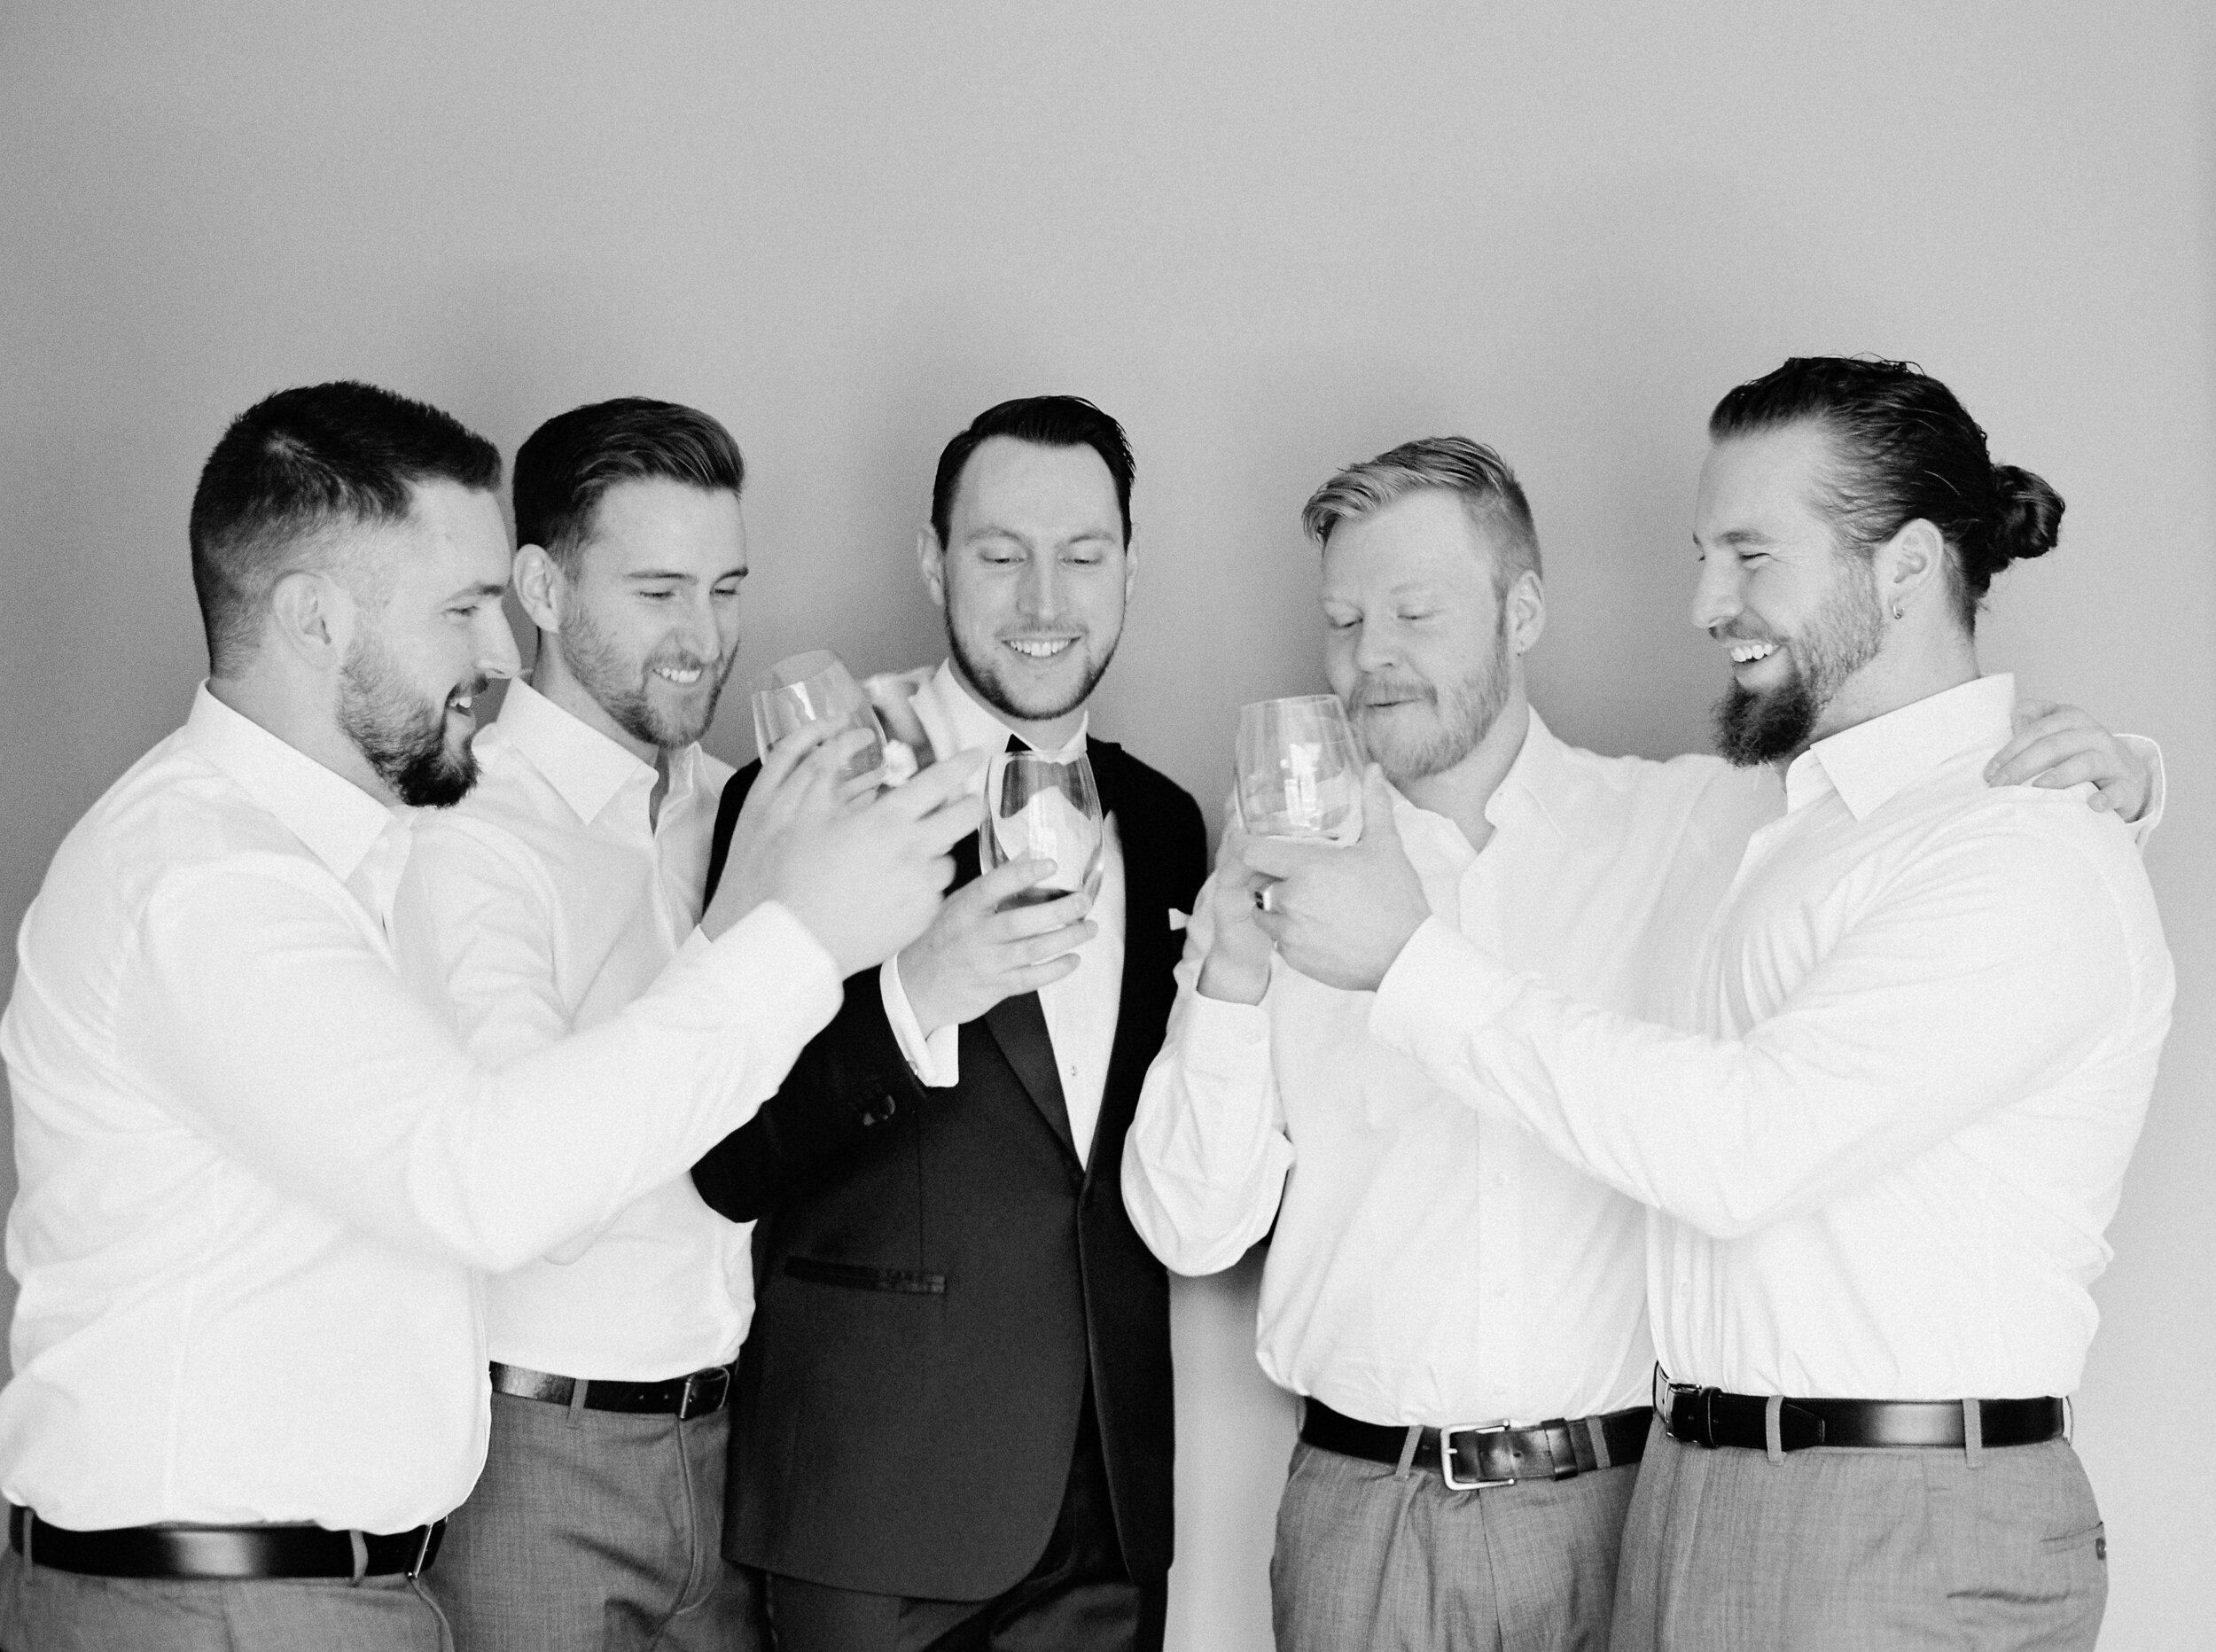  groom & groomsmen getting ready toast | Deane House Wedding | Calgary photographer | fine art film photography Justine Milton 